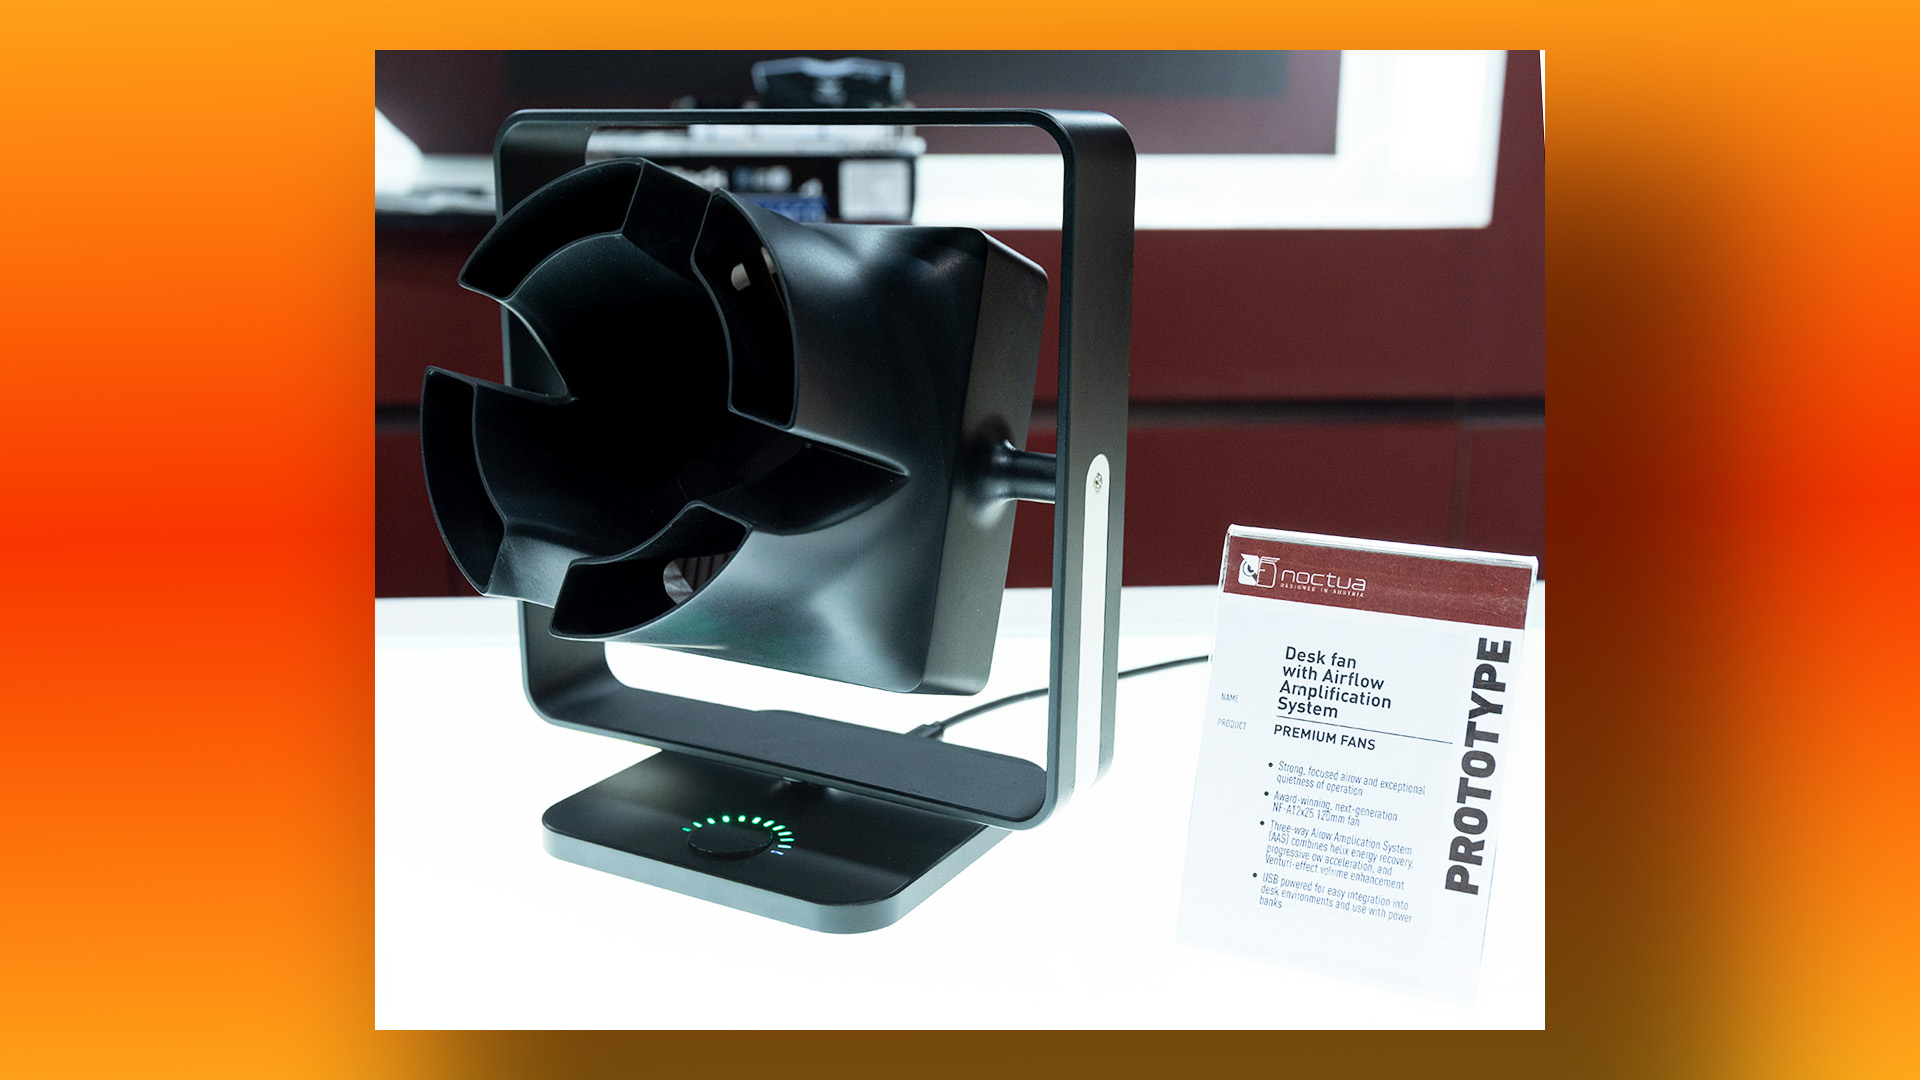 Noctua's new cooler tease: The Noctua desk fan prototype was shown off at Computex 2019